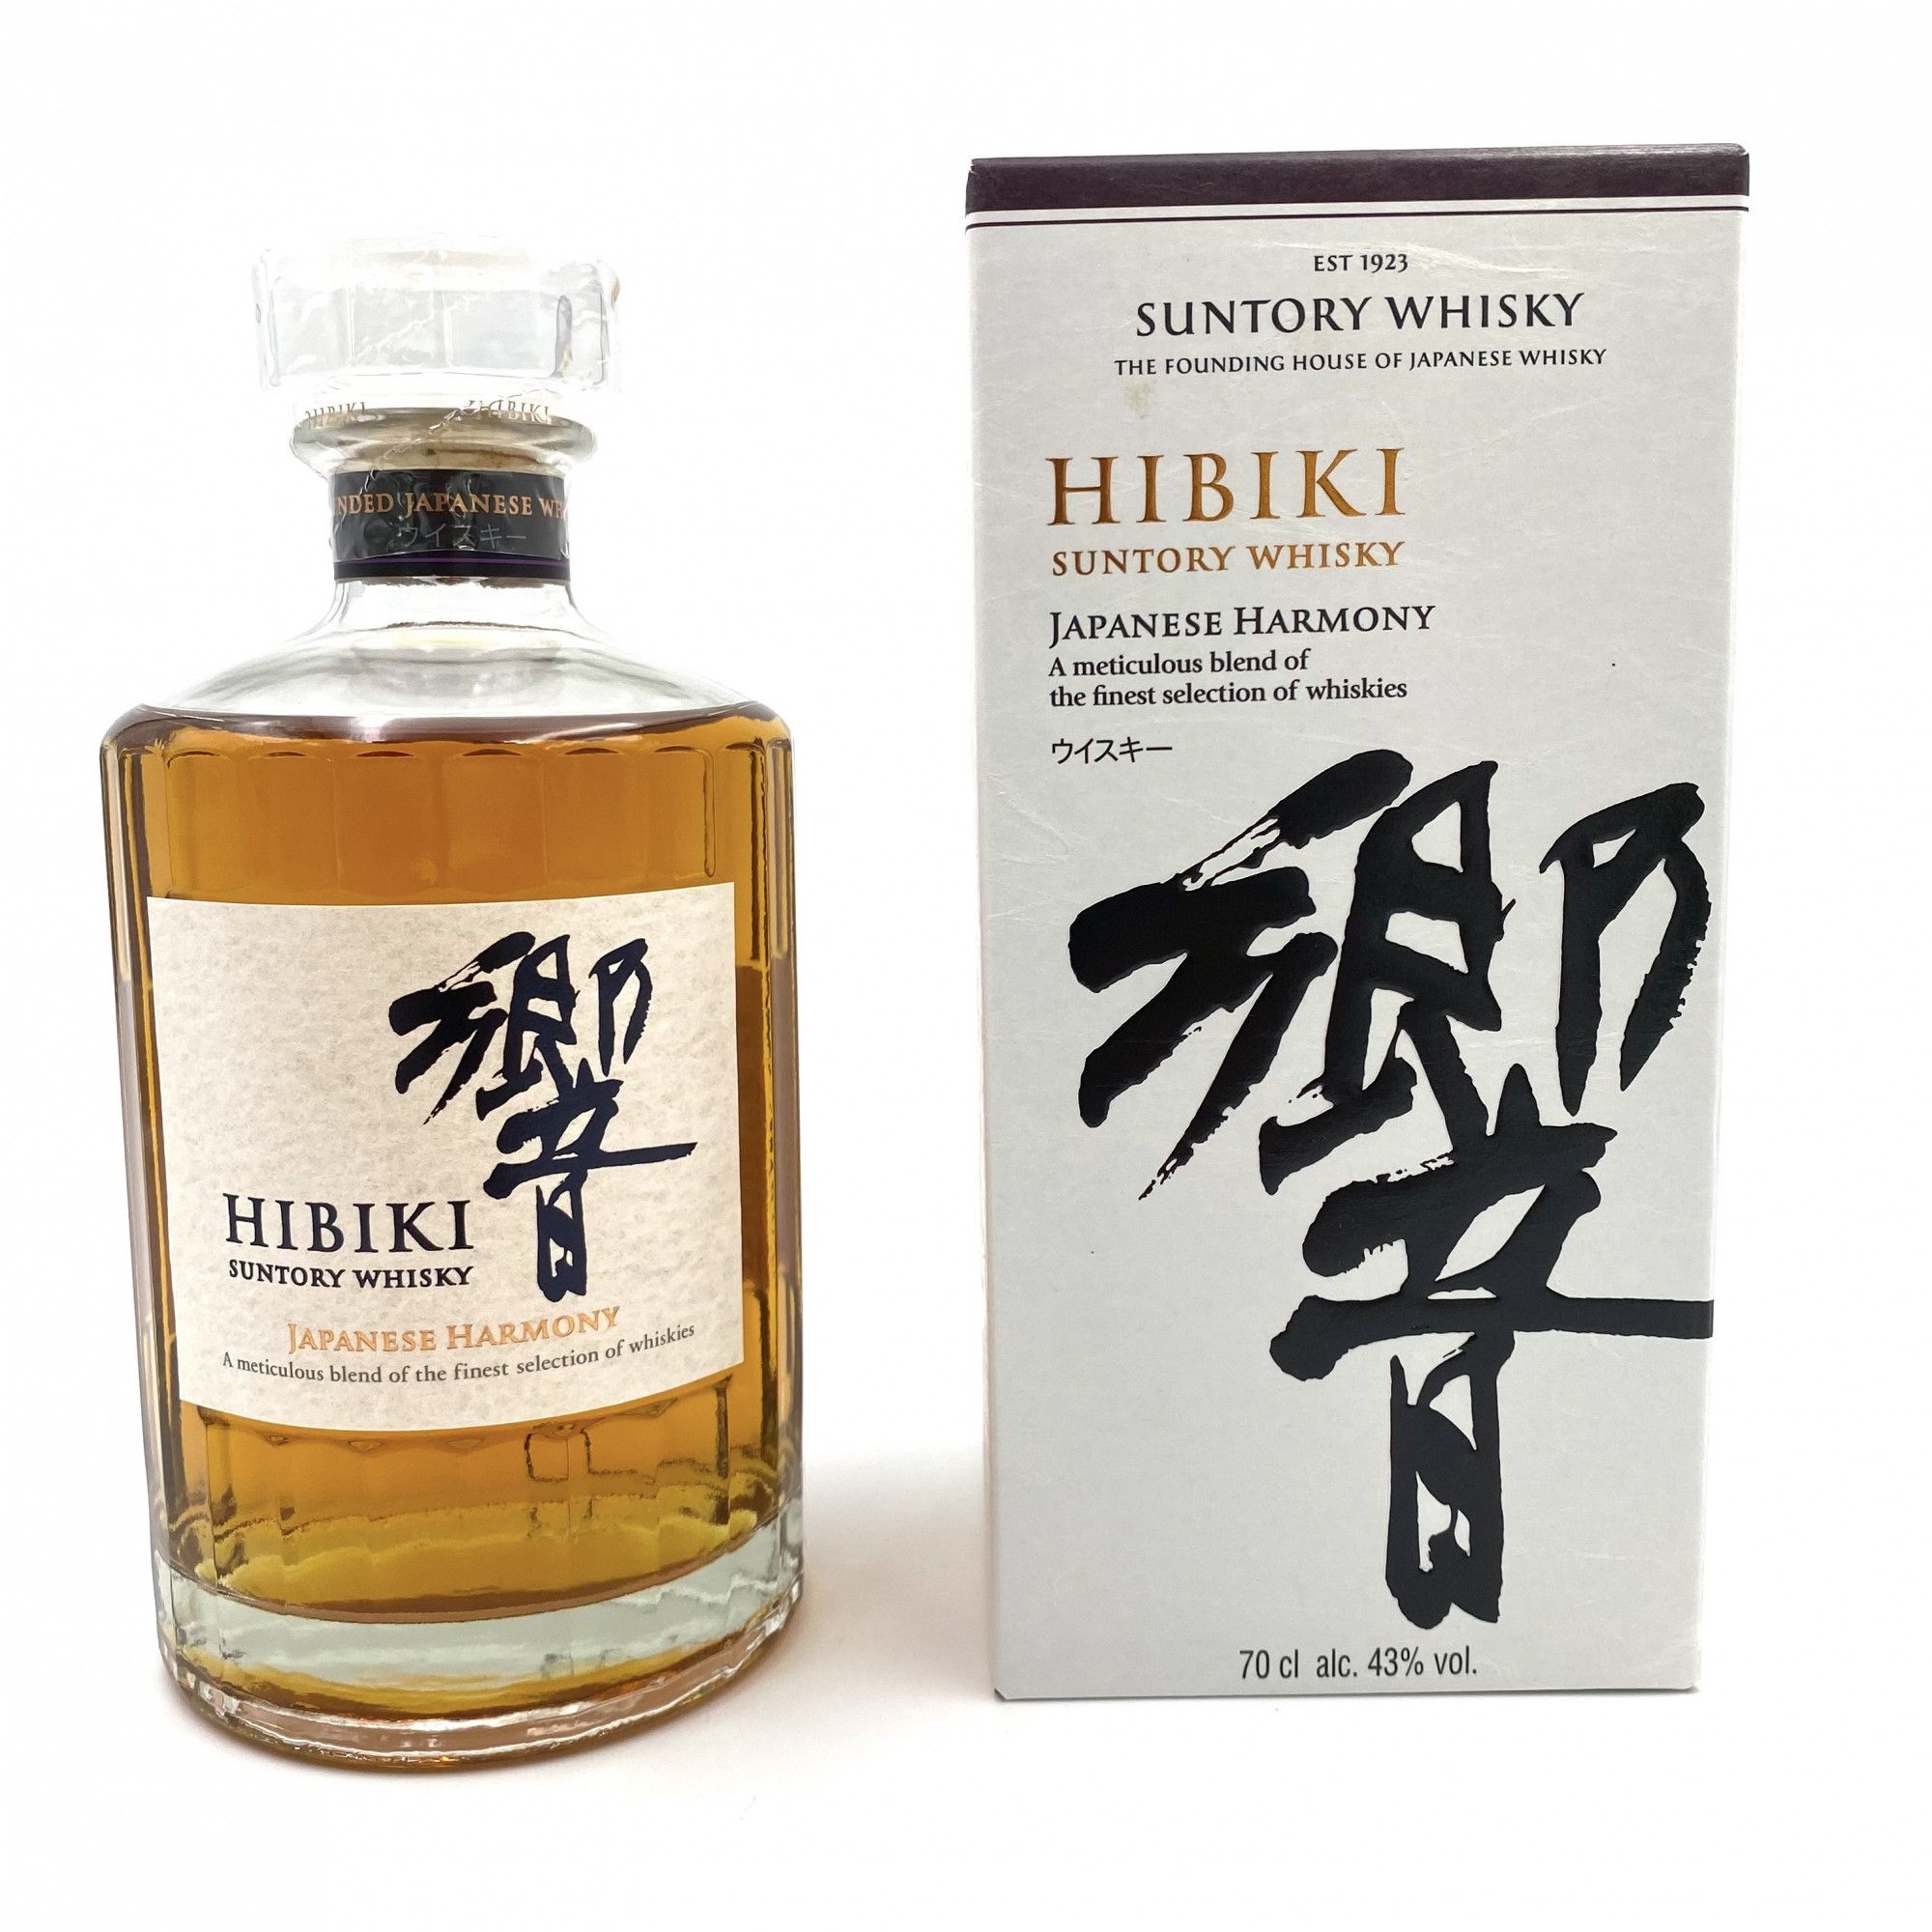 Hibiki Suntory Whisky, Japanese Harmony Blended